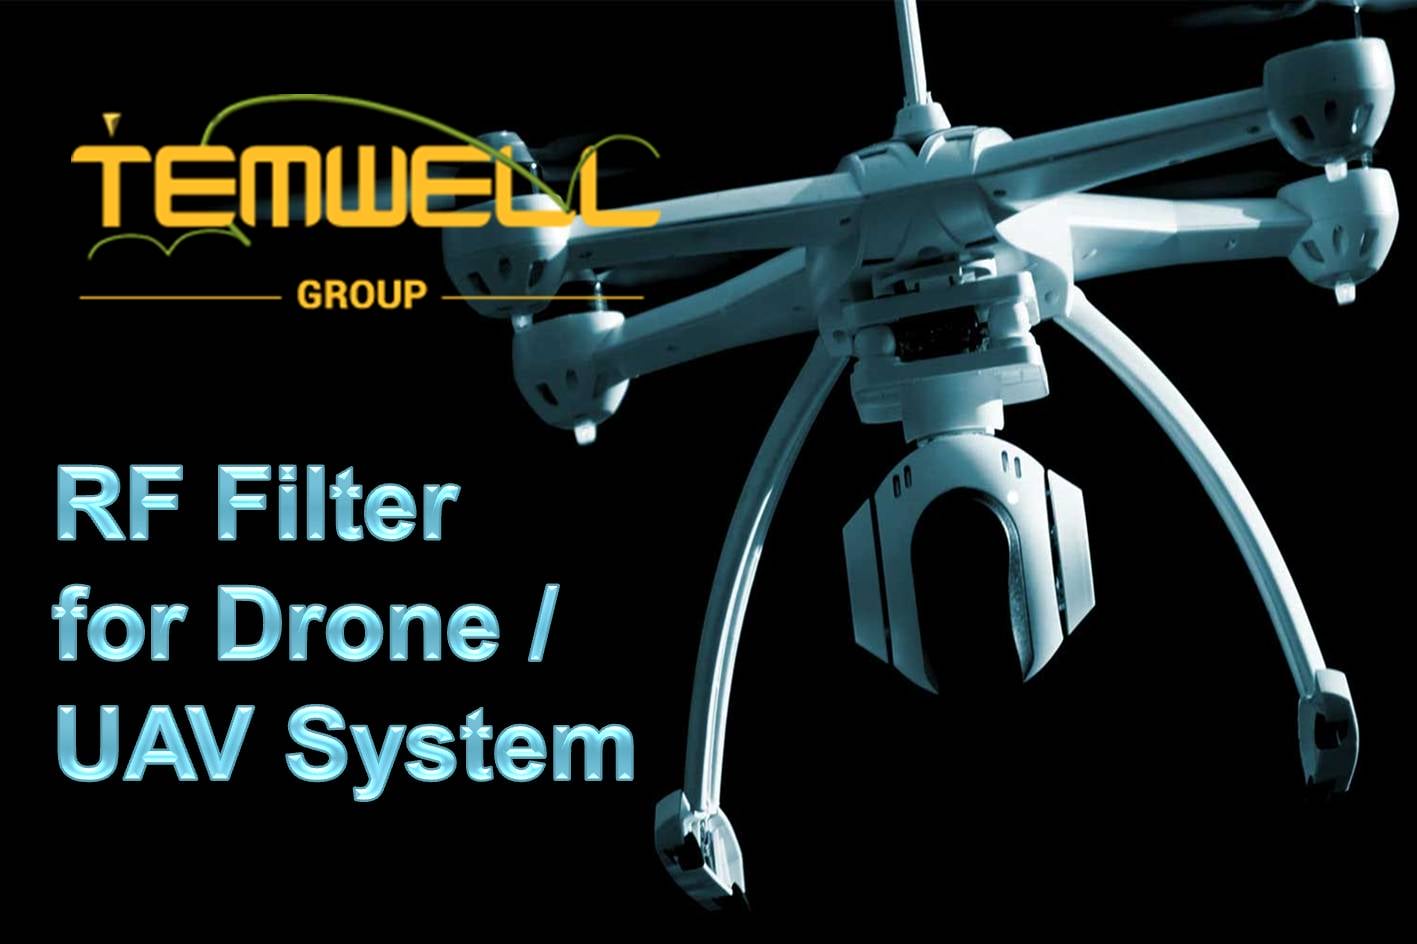 proimages/featured/drone-uav-system/drone-uav-system2.jpg